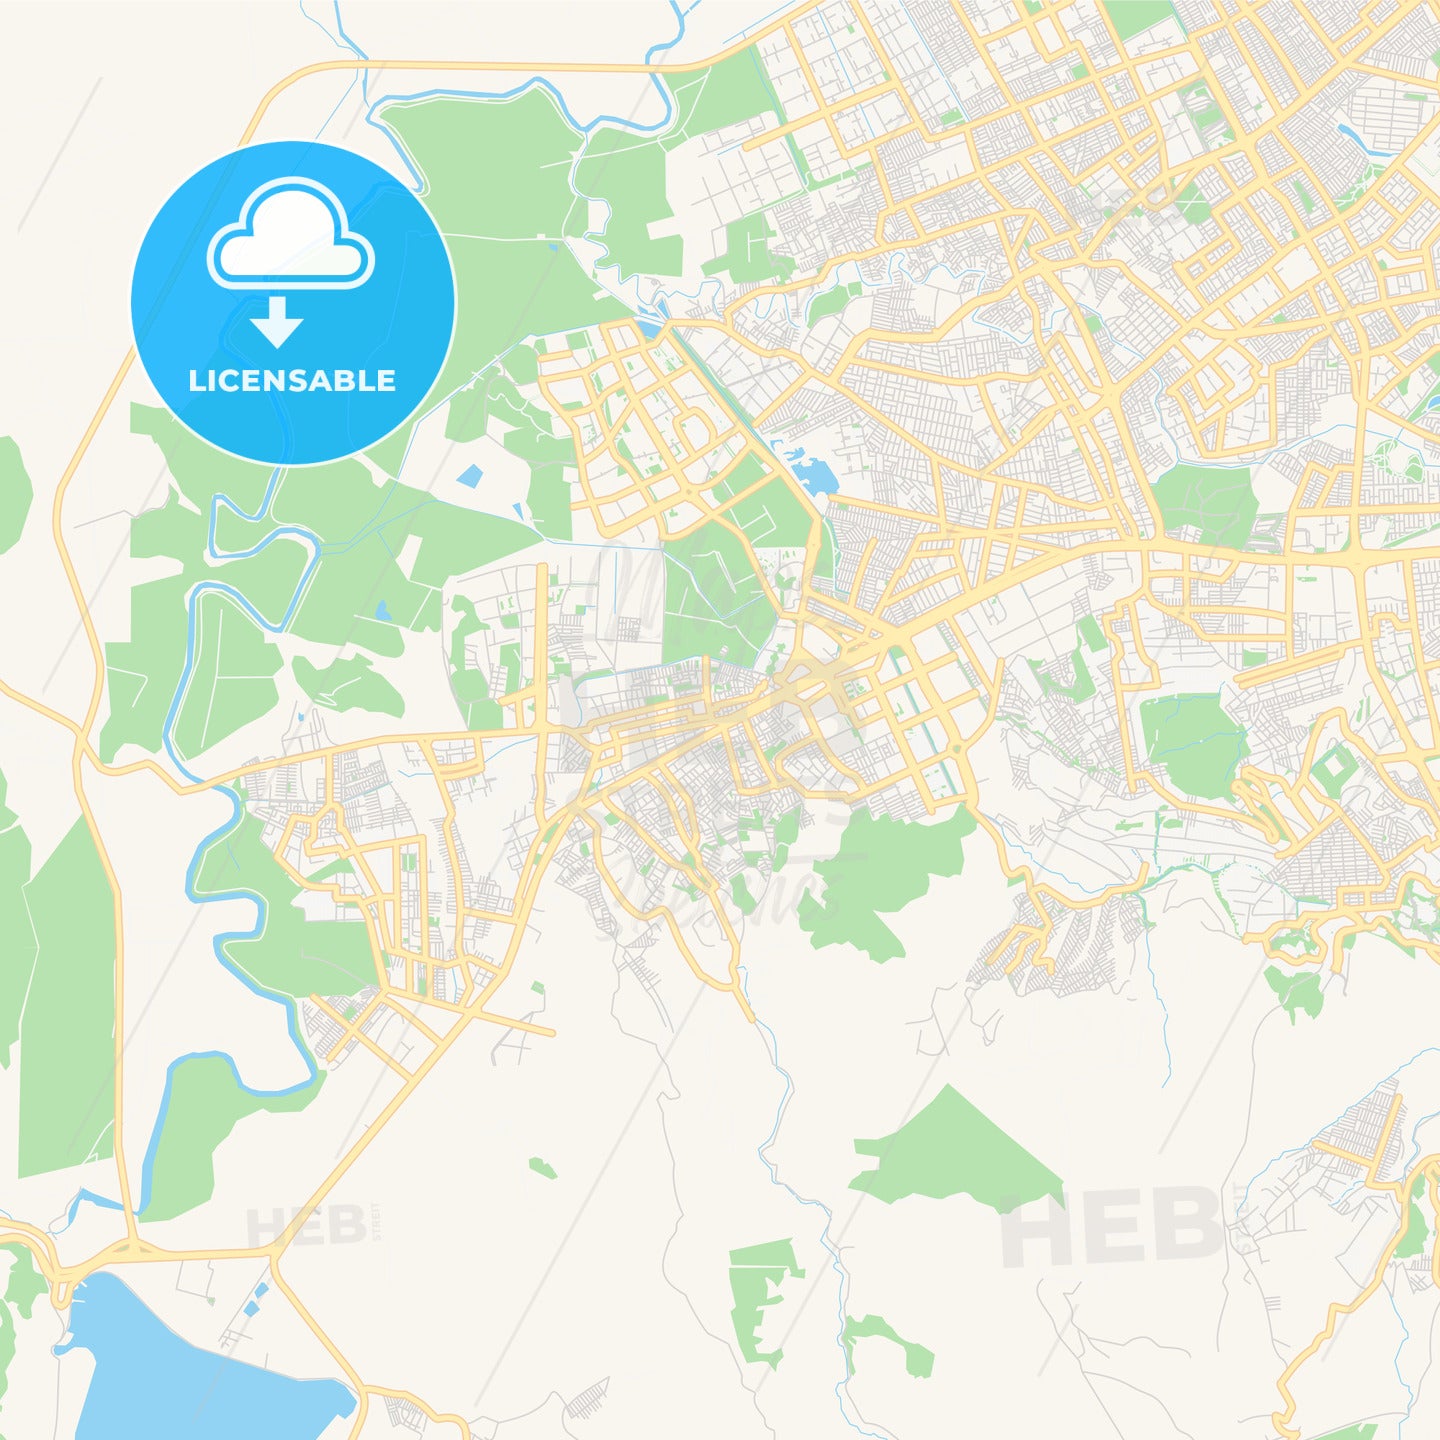 Printable street map of Soacha, Colombia